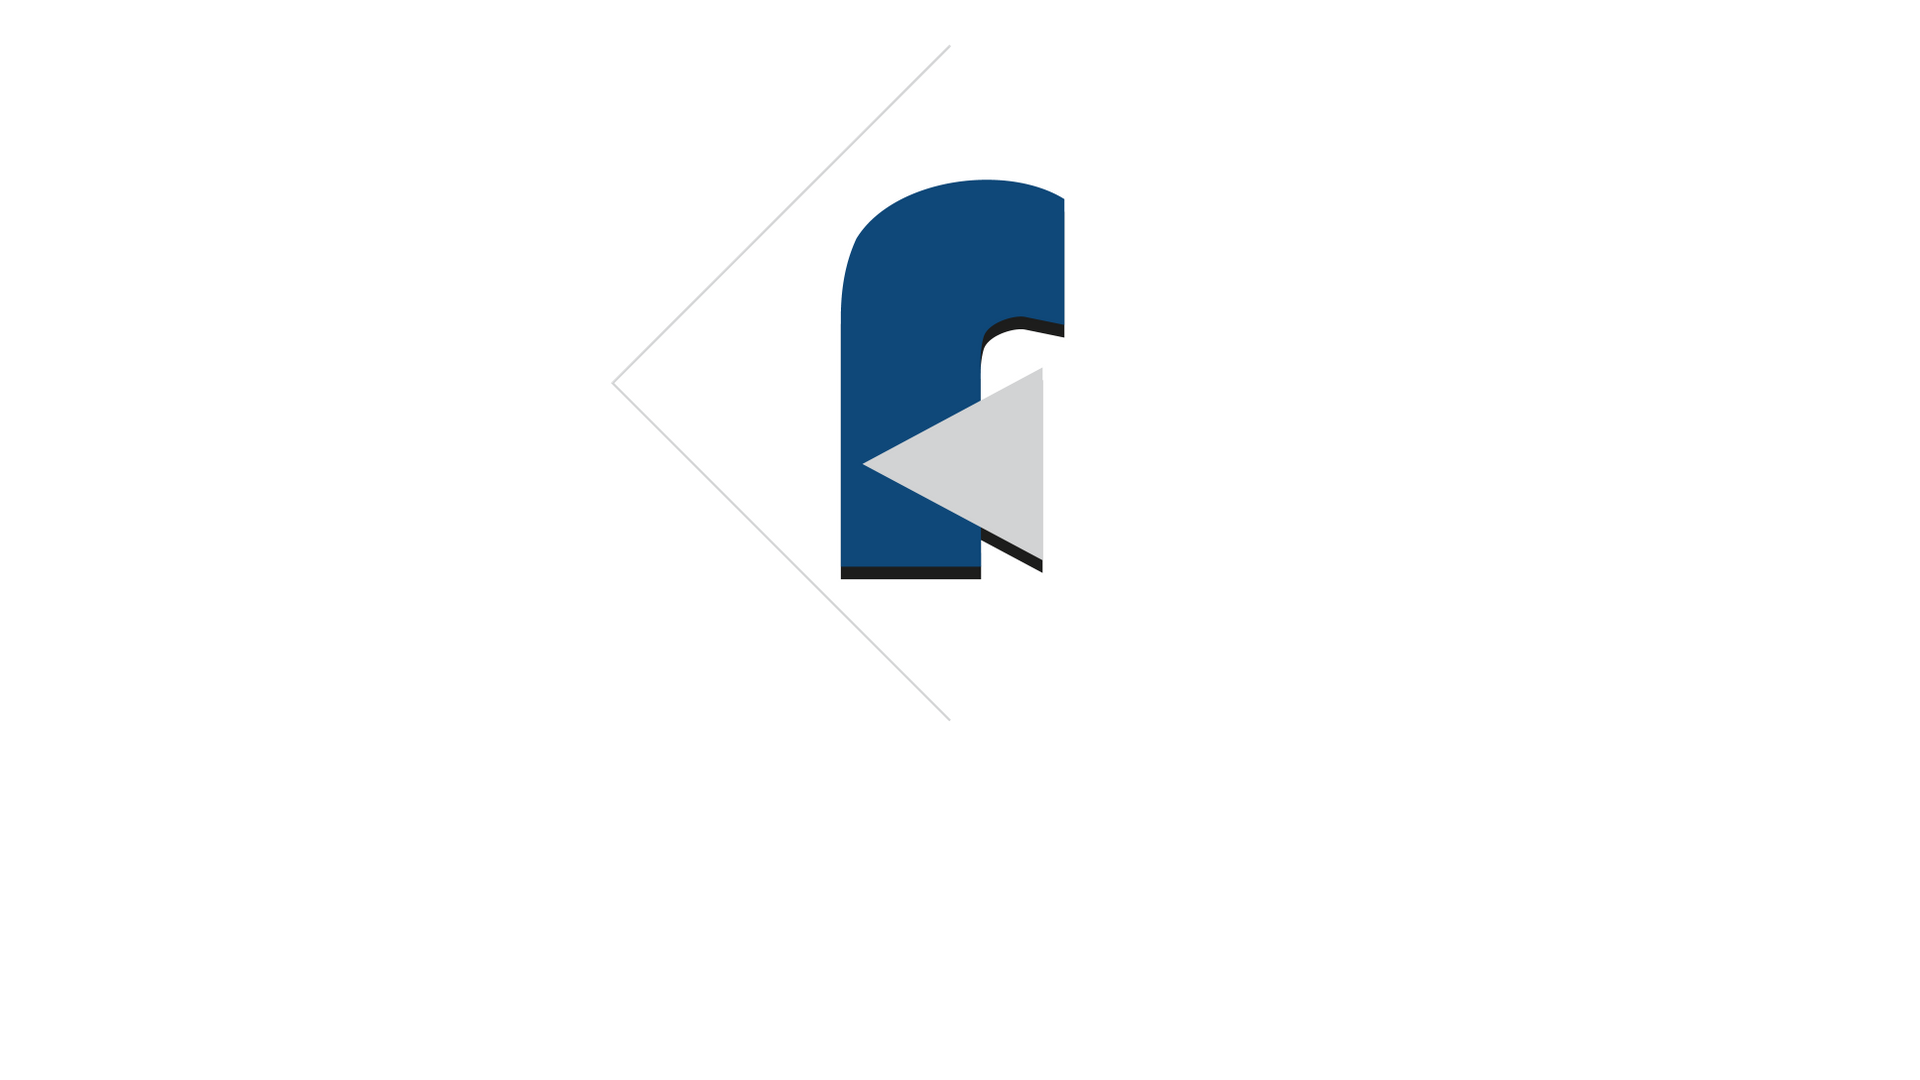 Fiesta Bahia Hotel